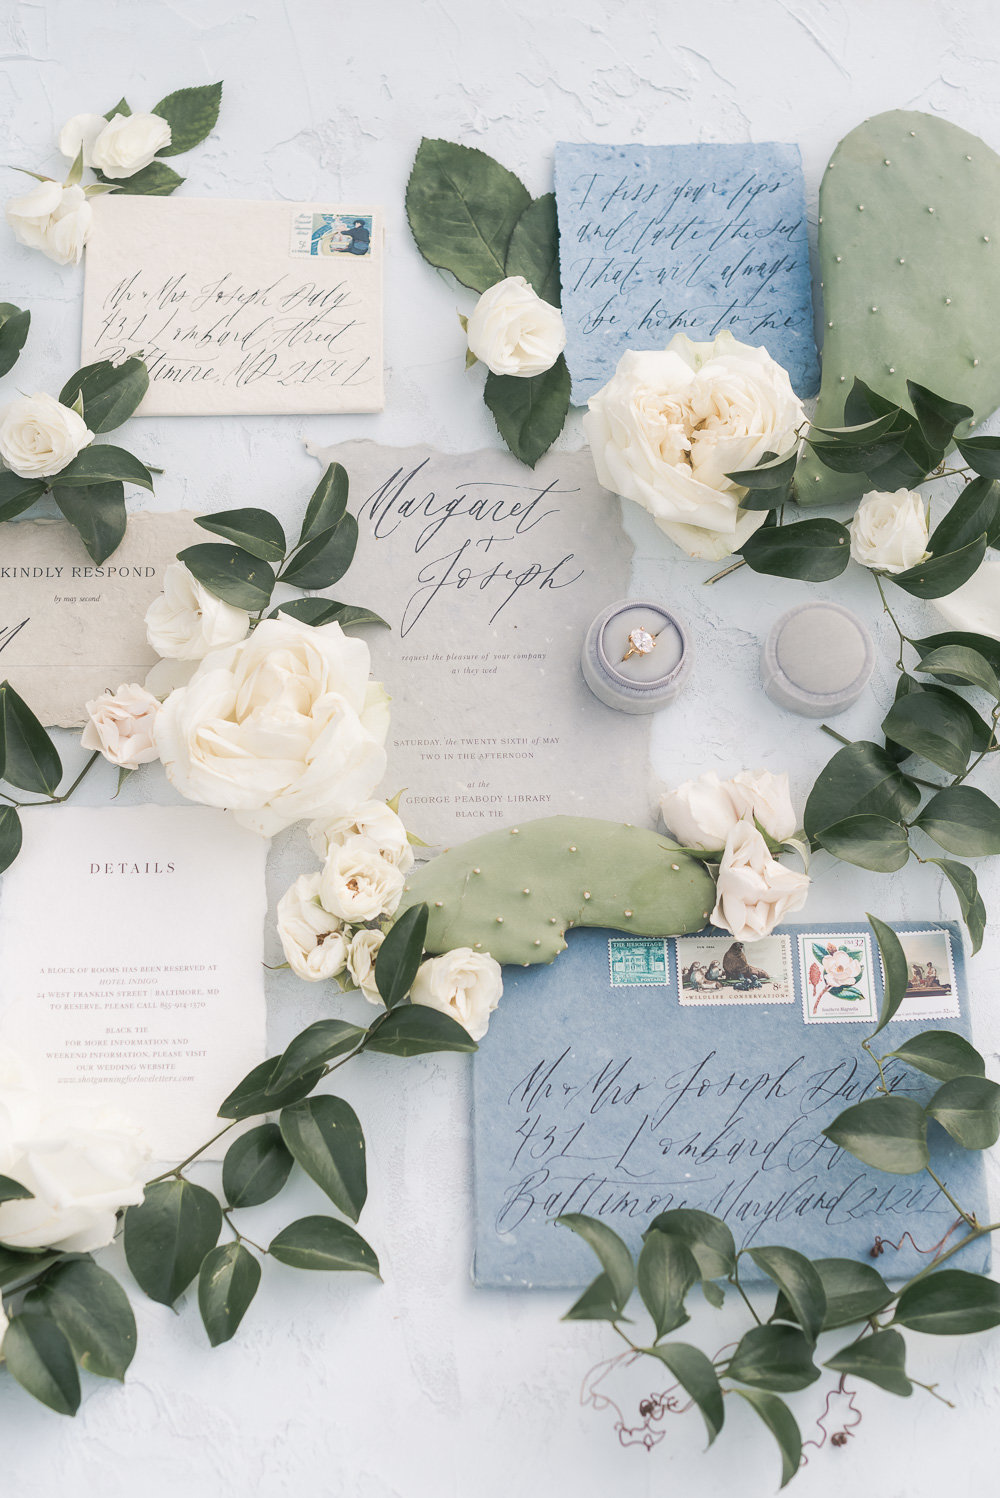 Three blue envelopes for wedding invitations